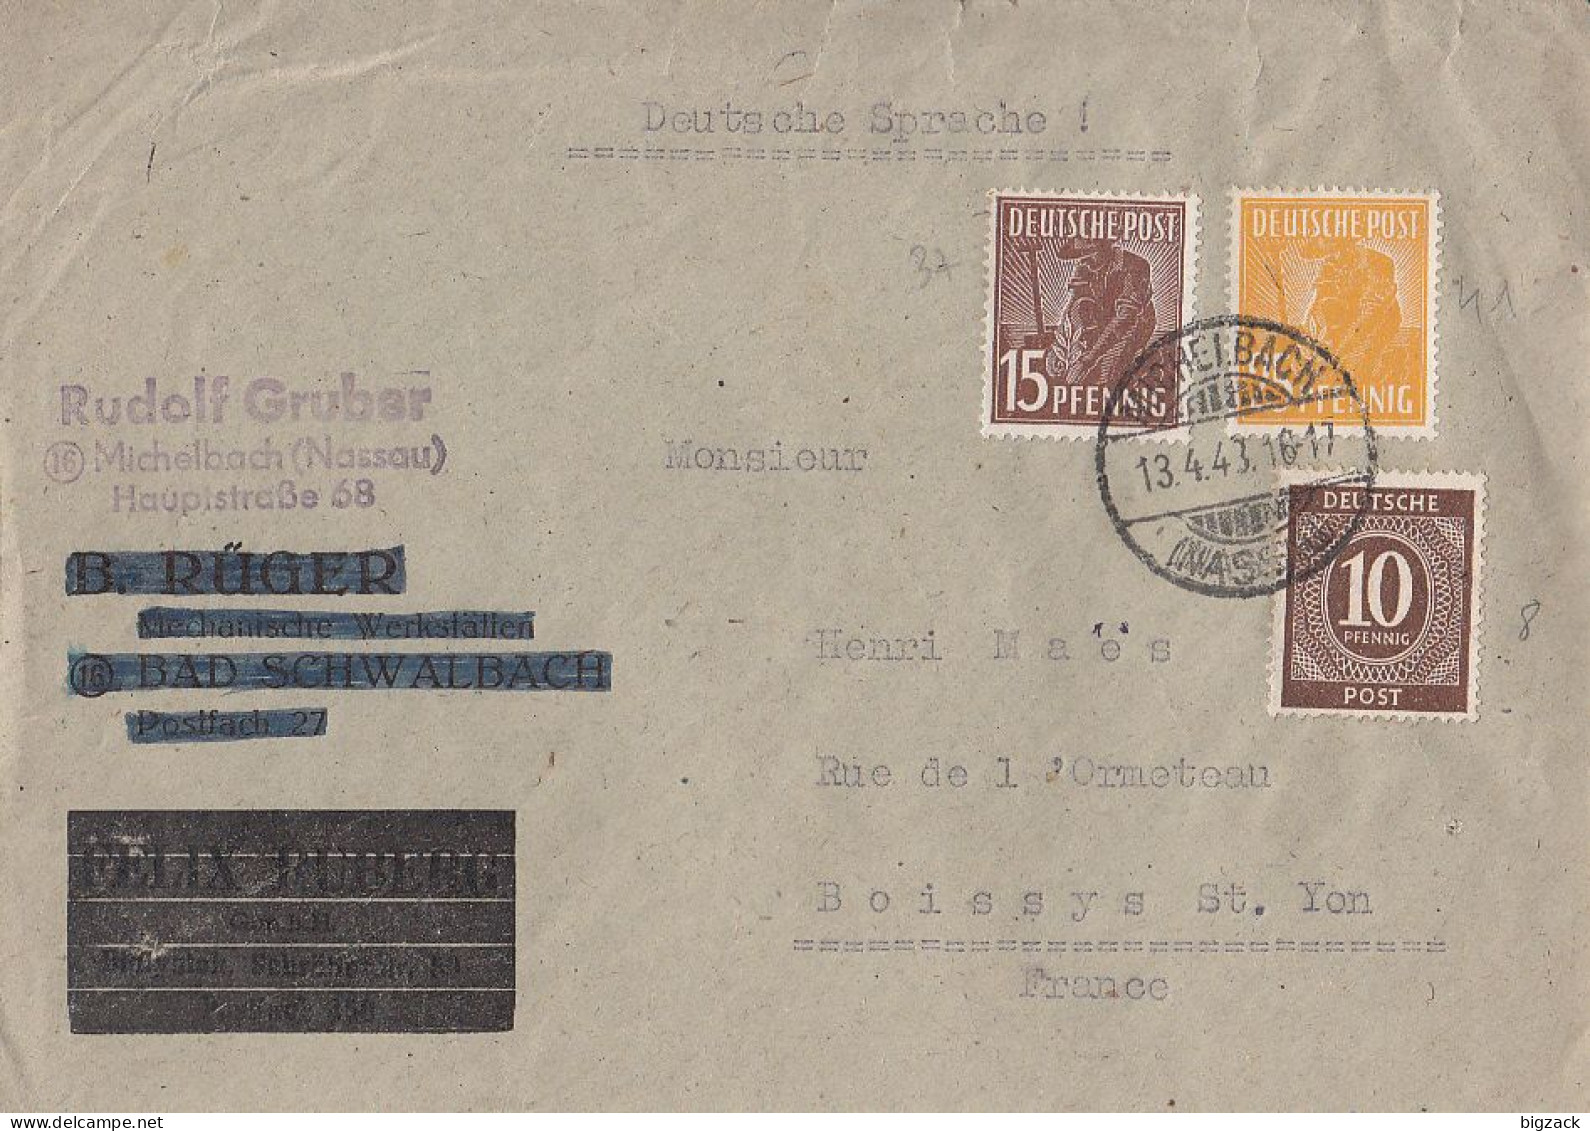 Gemeina. Brief Mif Minr.918,948,952 Michelbach 13.4.48 Gel. Nach Frankreich - Covers & Documents